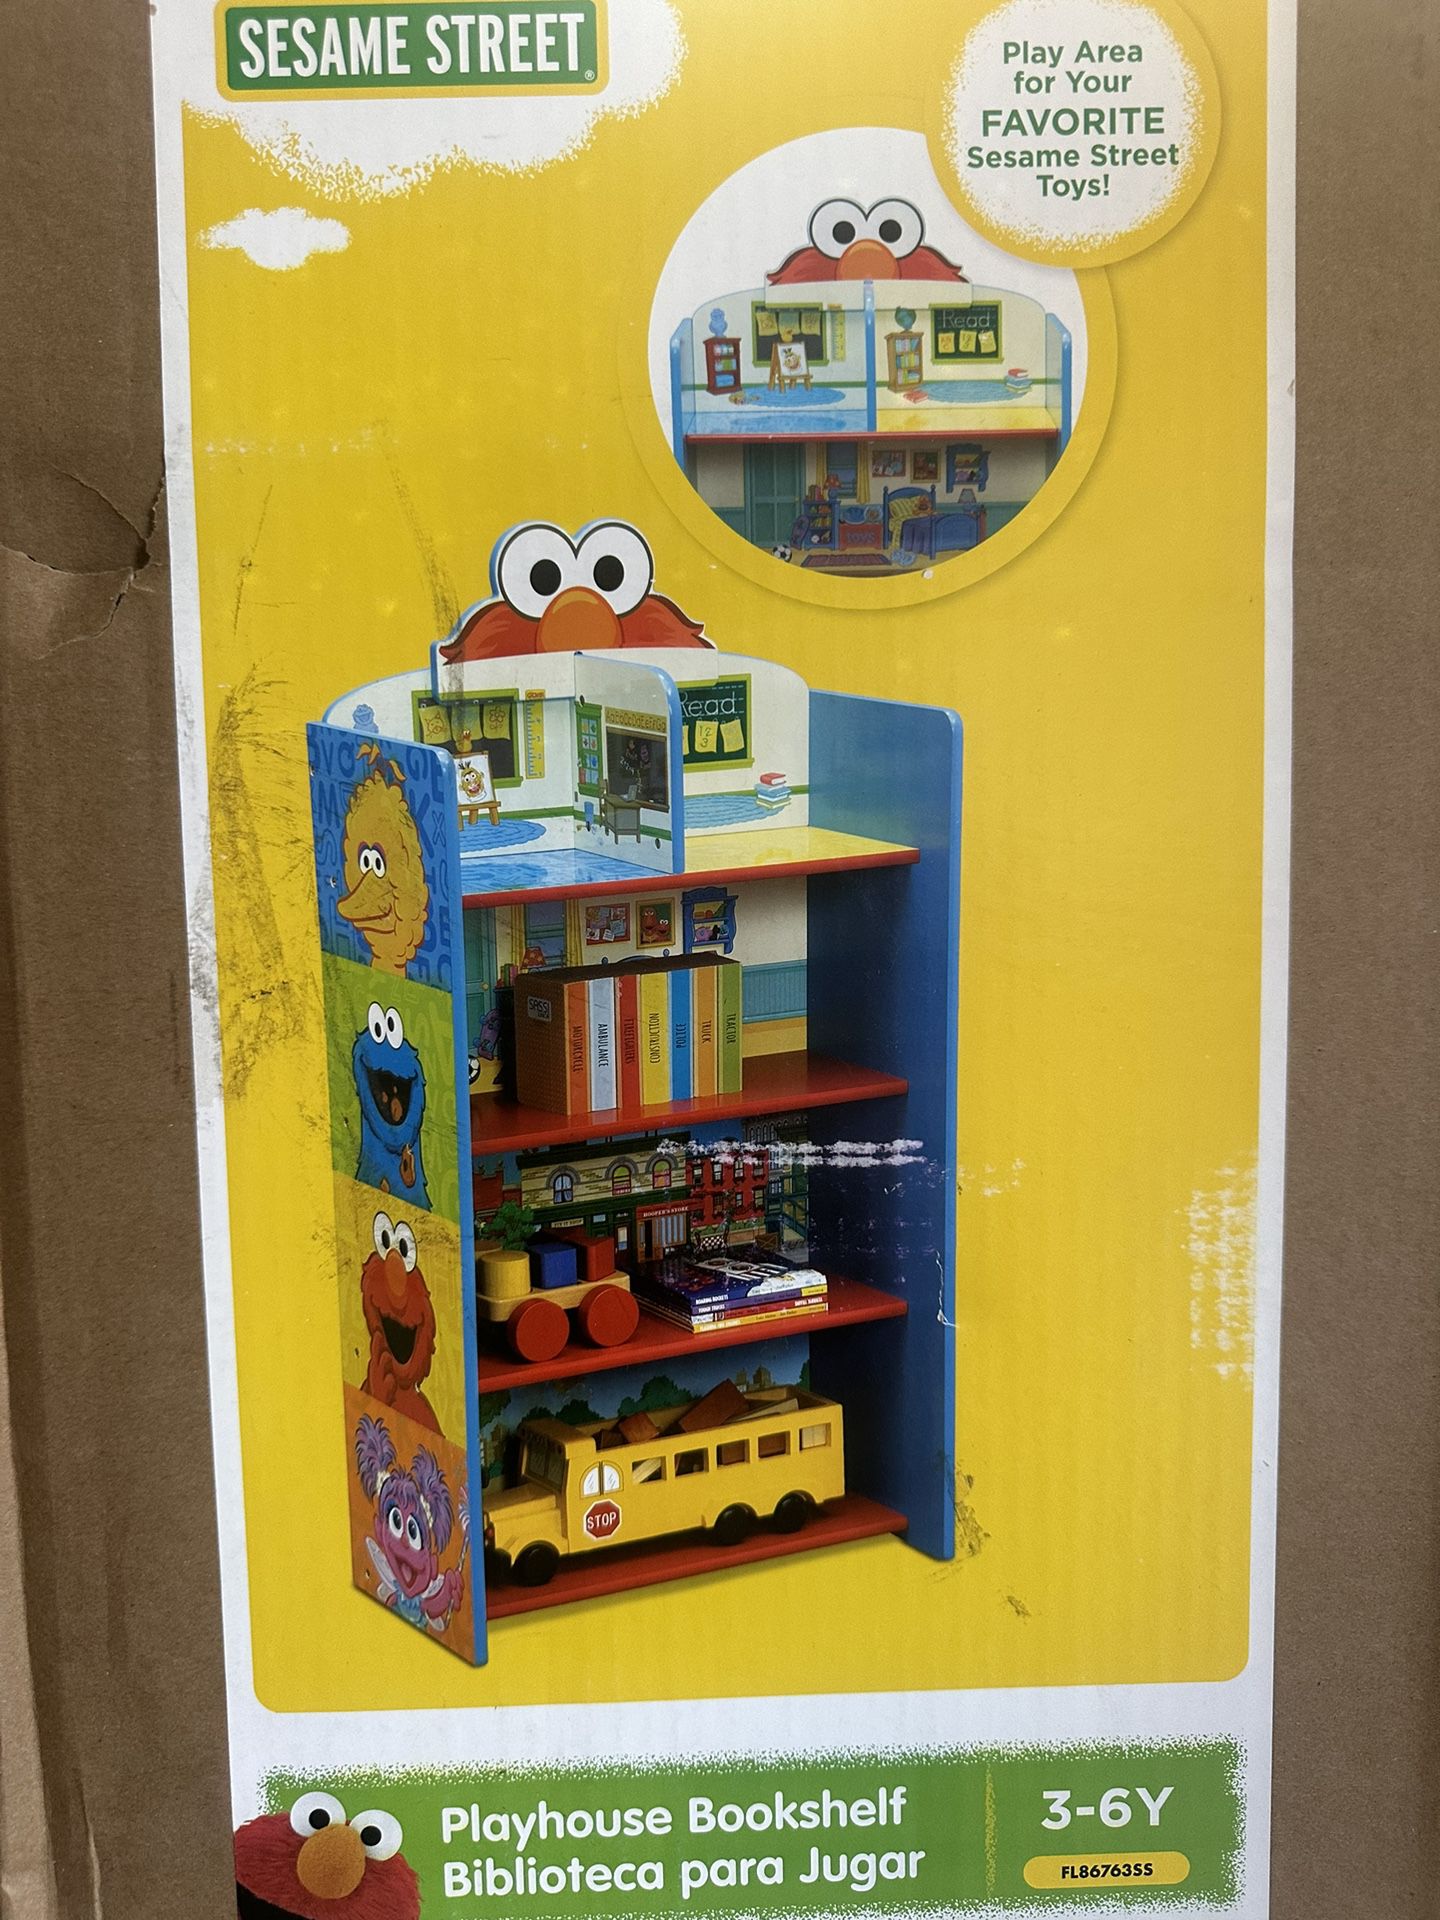 Elmo, bookshelf, and playhouse